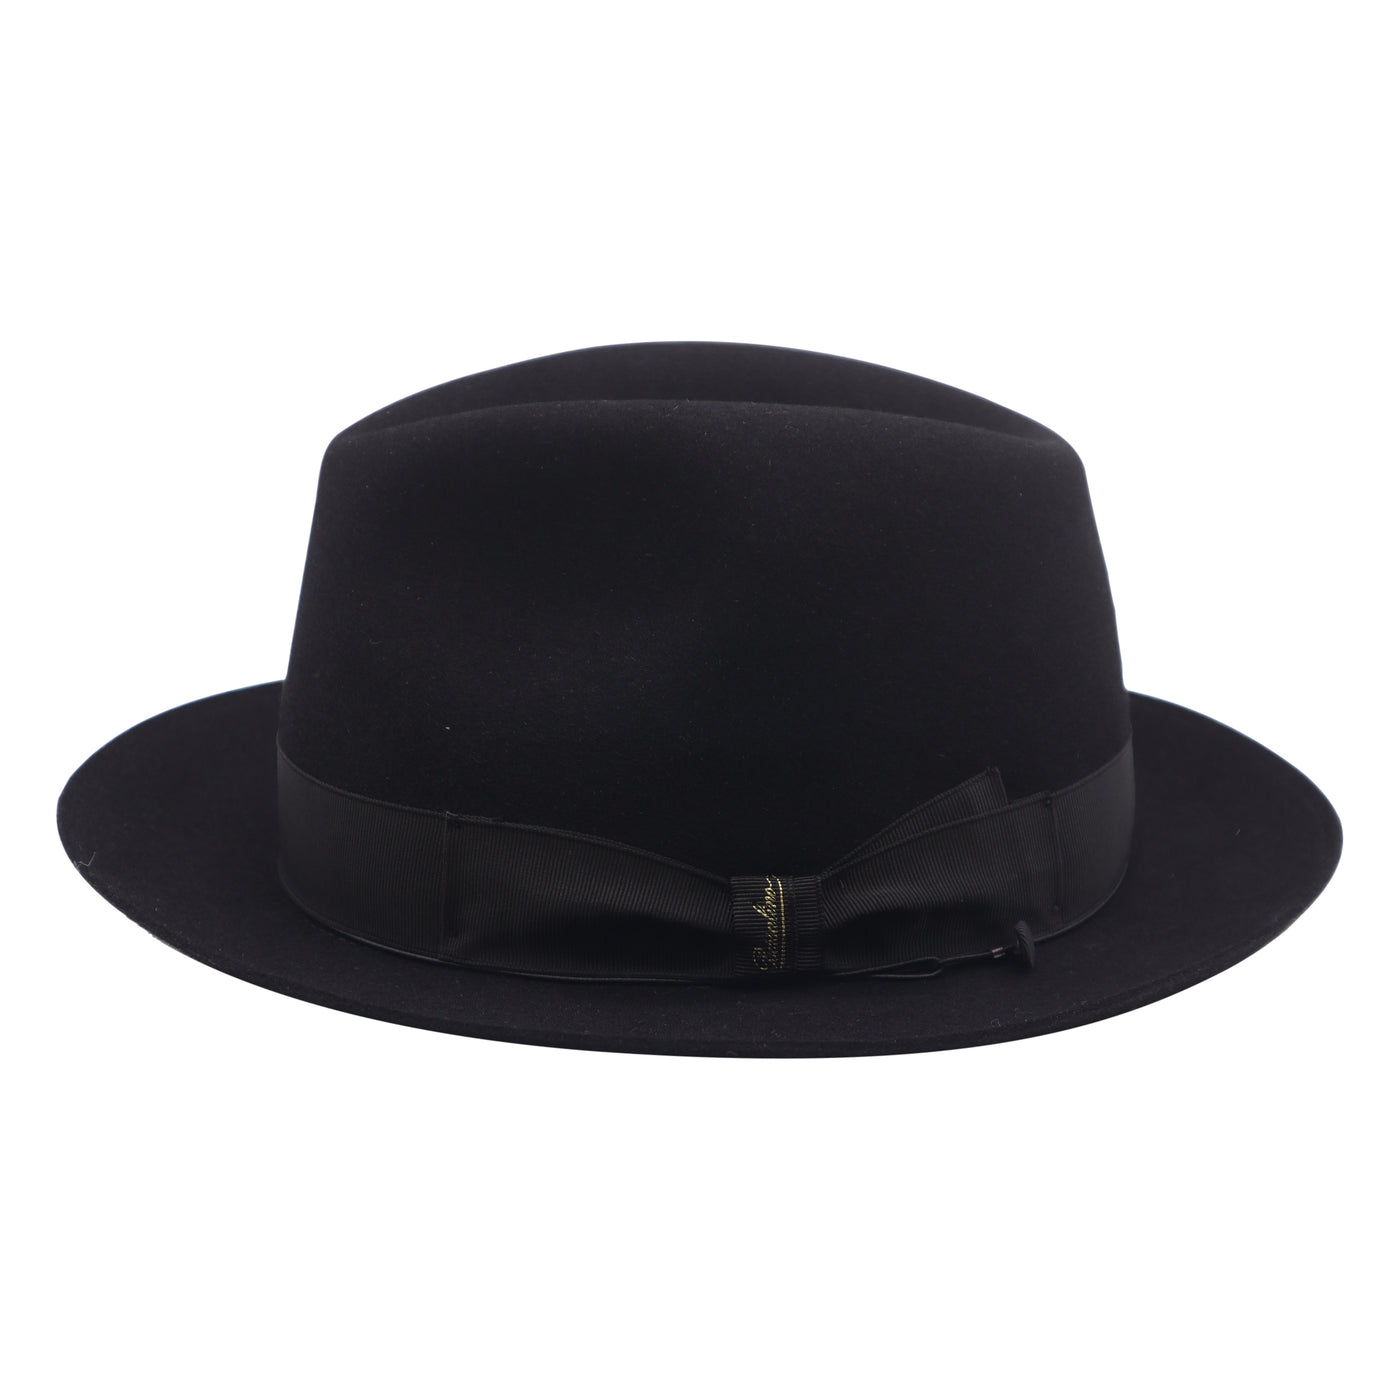 Minicio 200, product_type] - Borsalino for Atica fedora hat